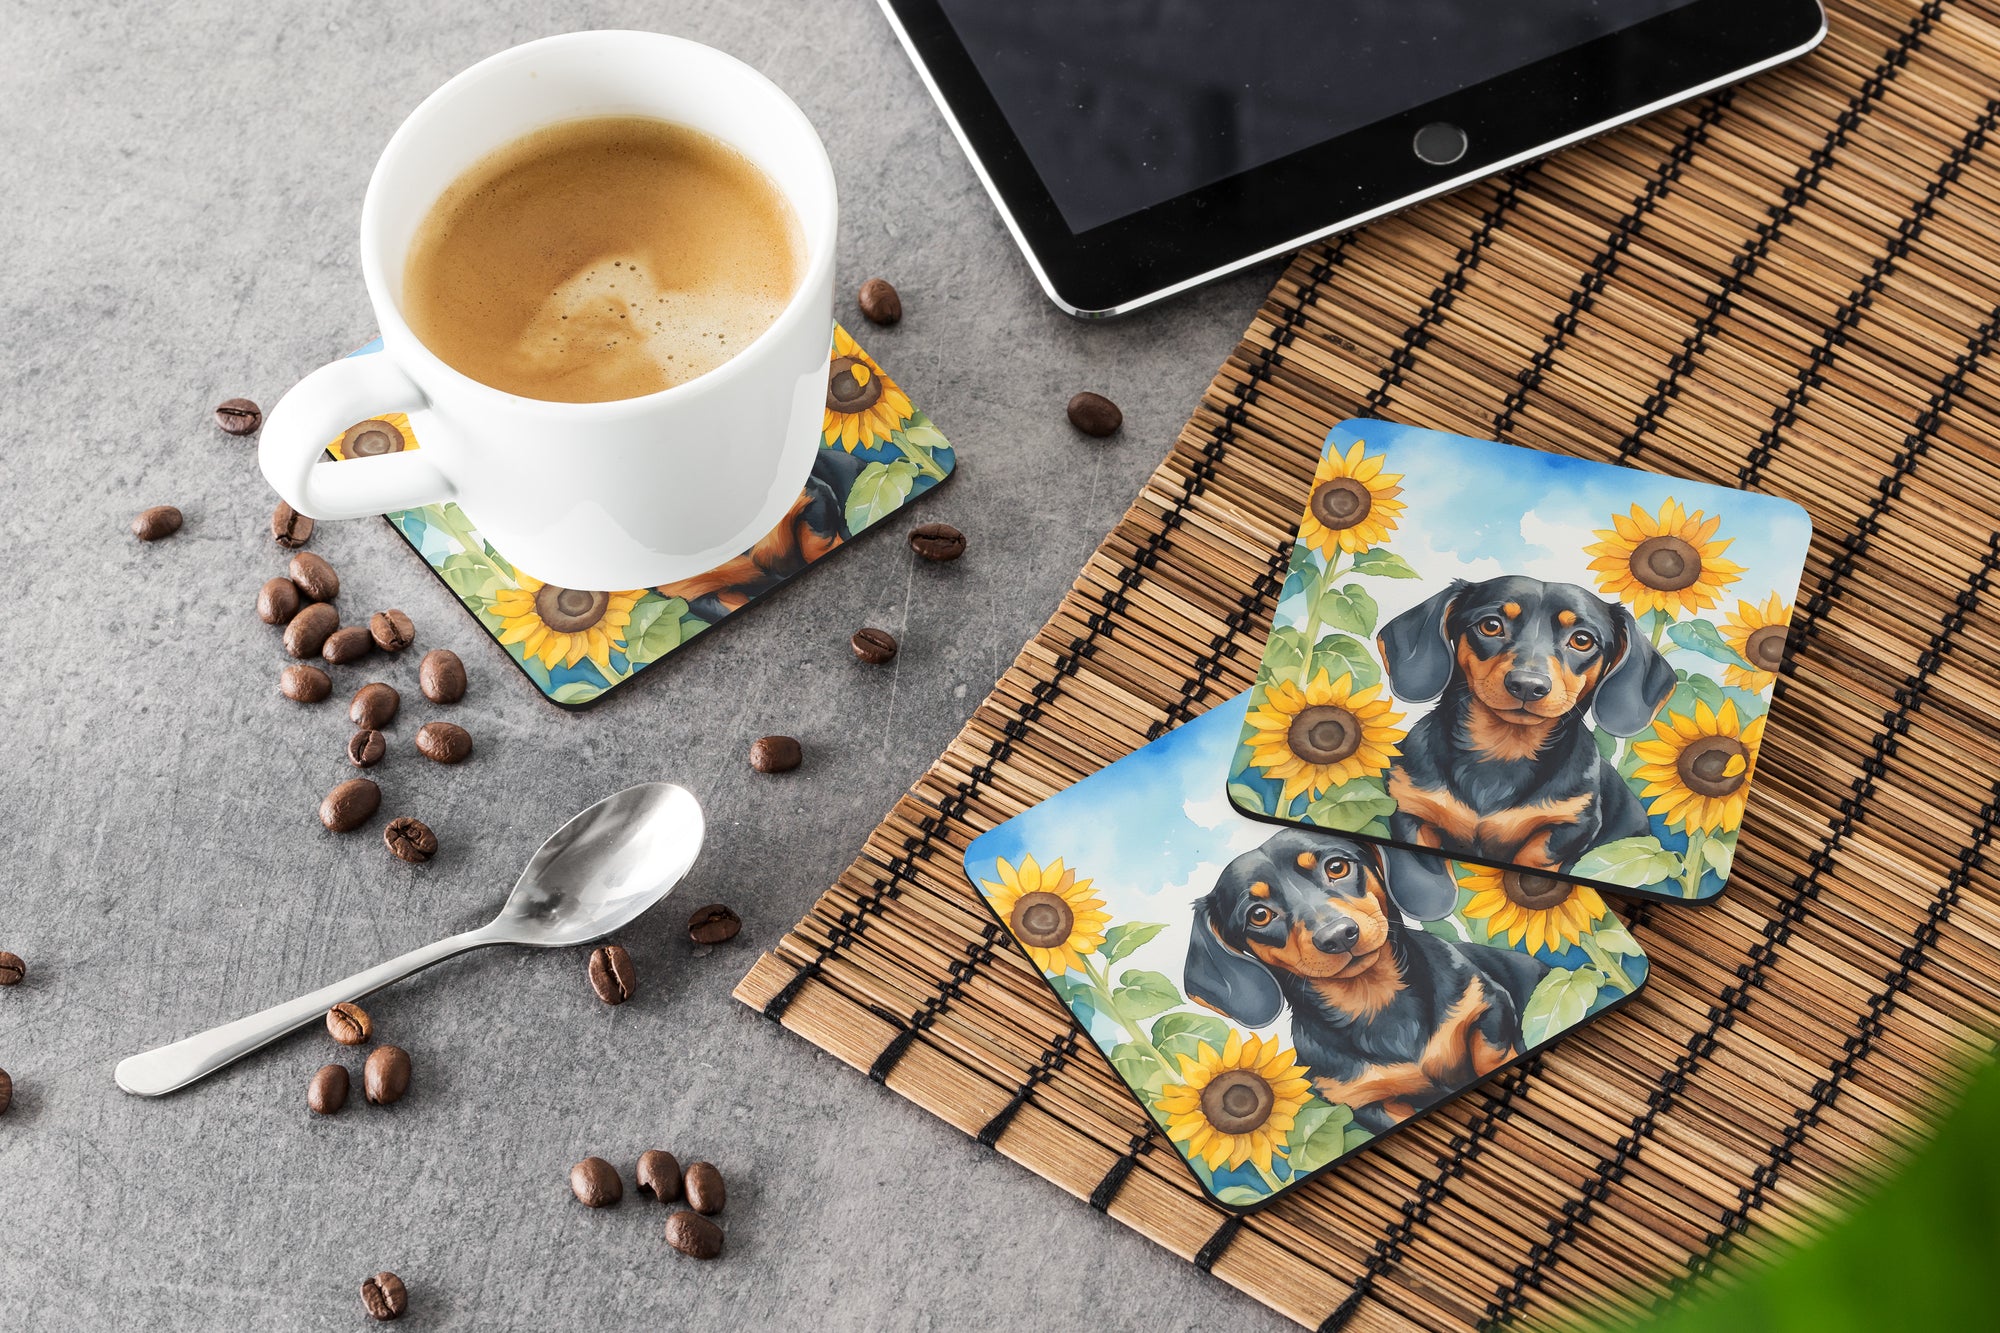 Dachshund in Sunflowers Foam Coasters